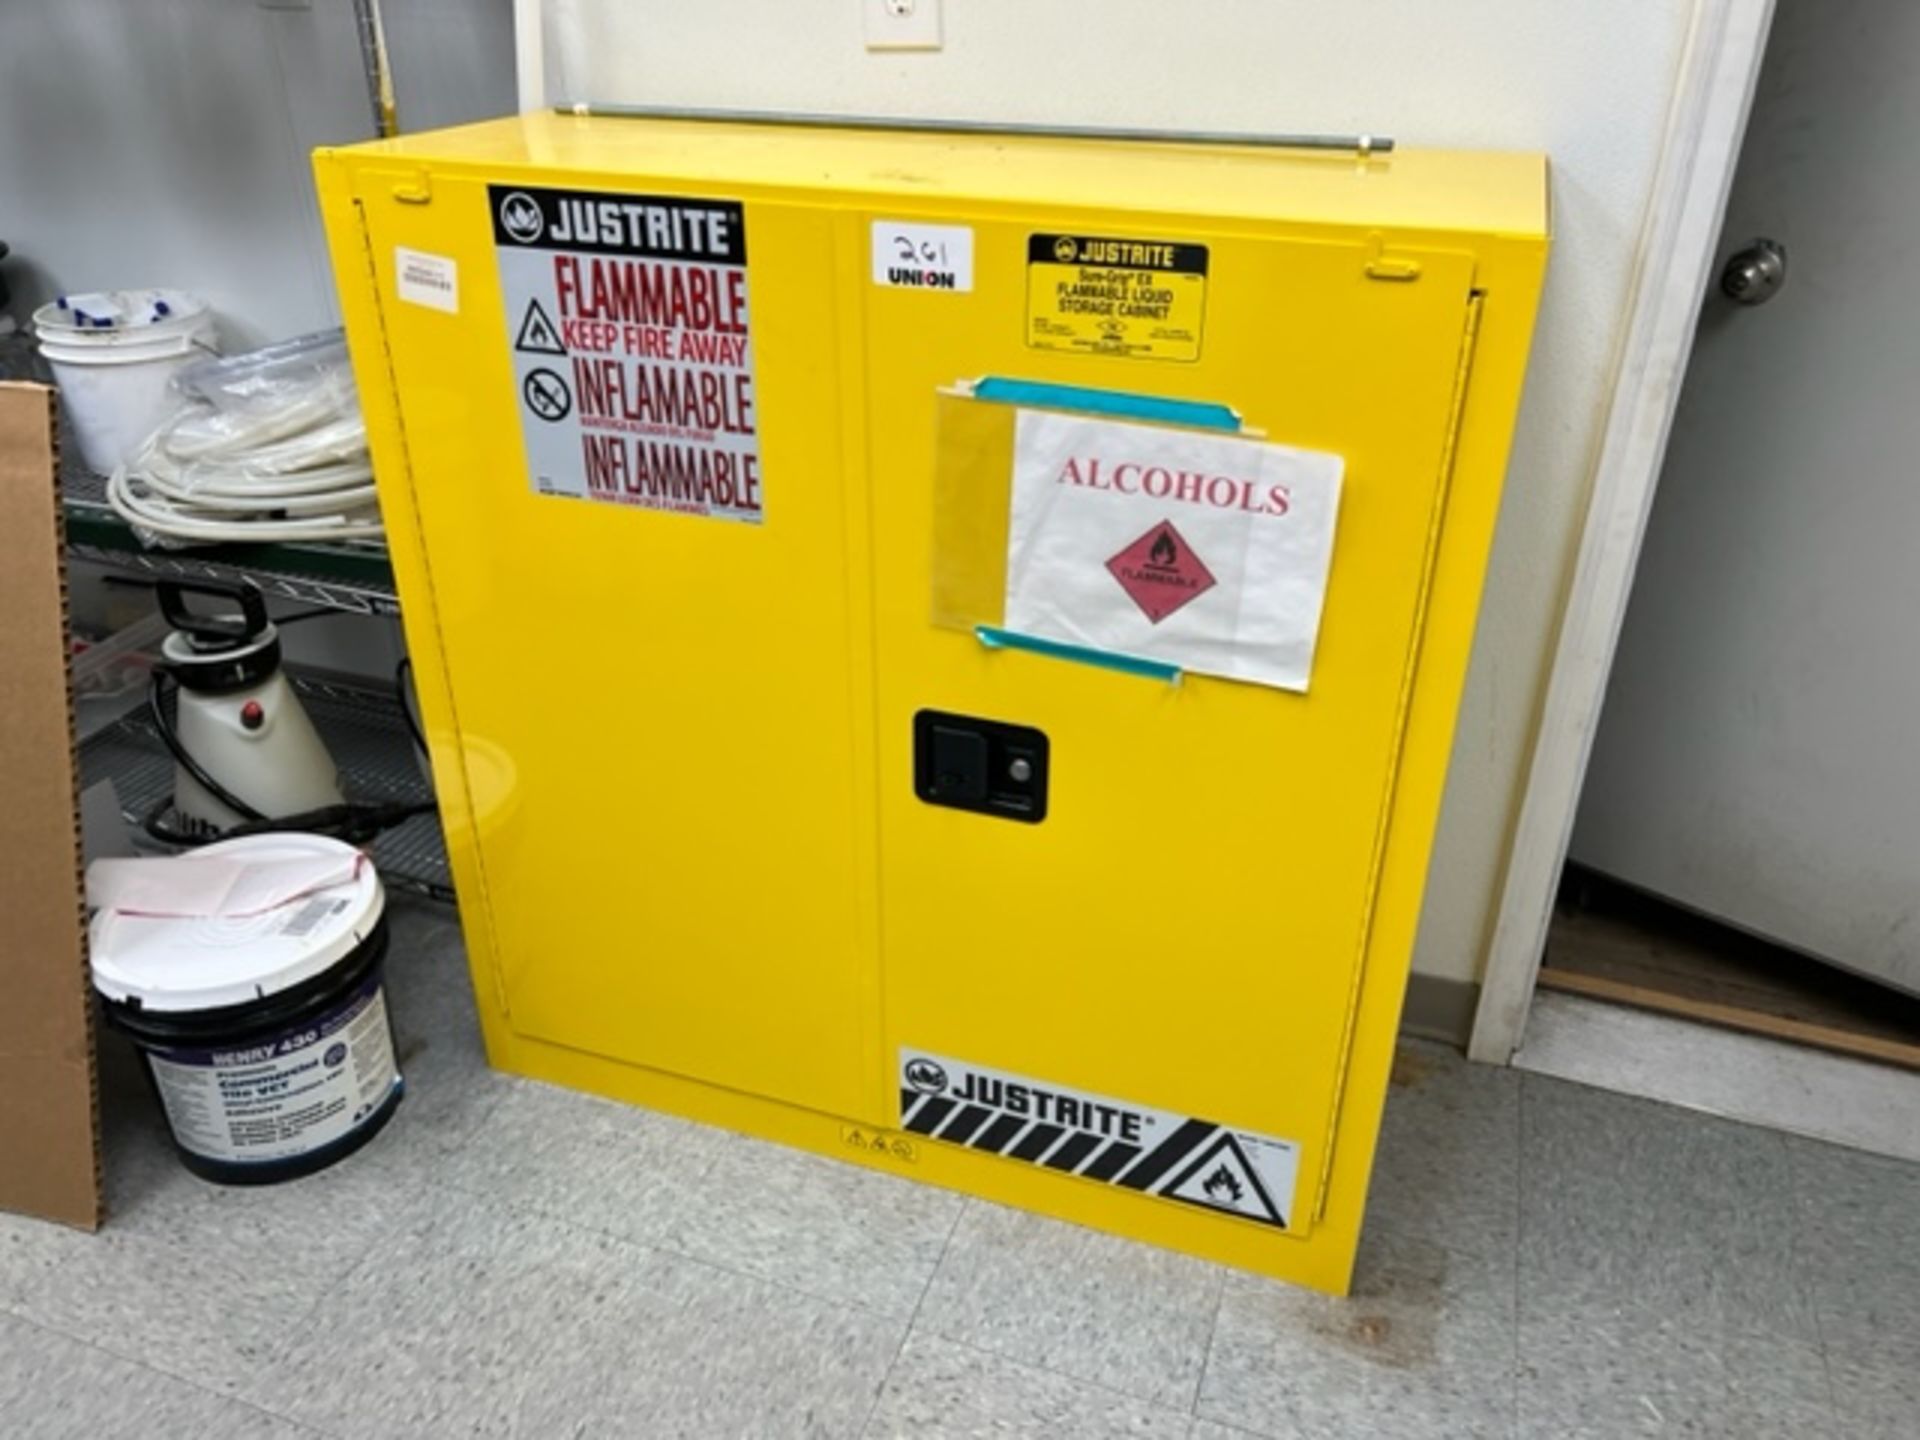 Asset 261- Justrite flammable liquid storage cabinet, 39" wide x 17" deep x 43" tall. $345.00 Rigged